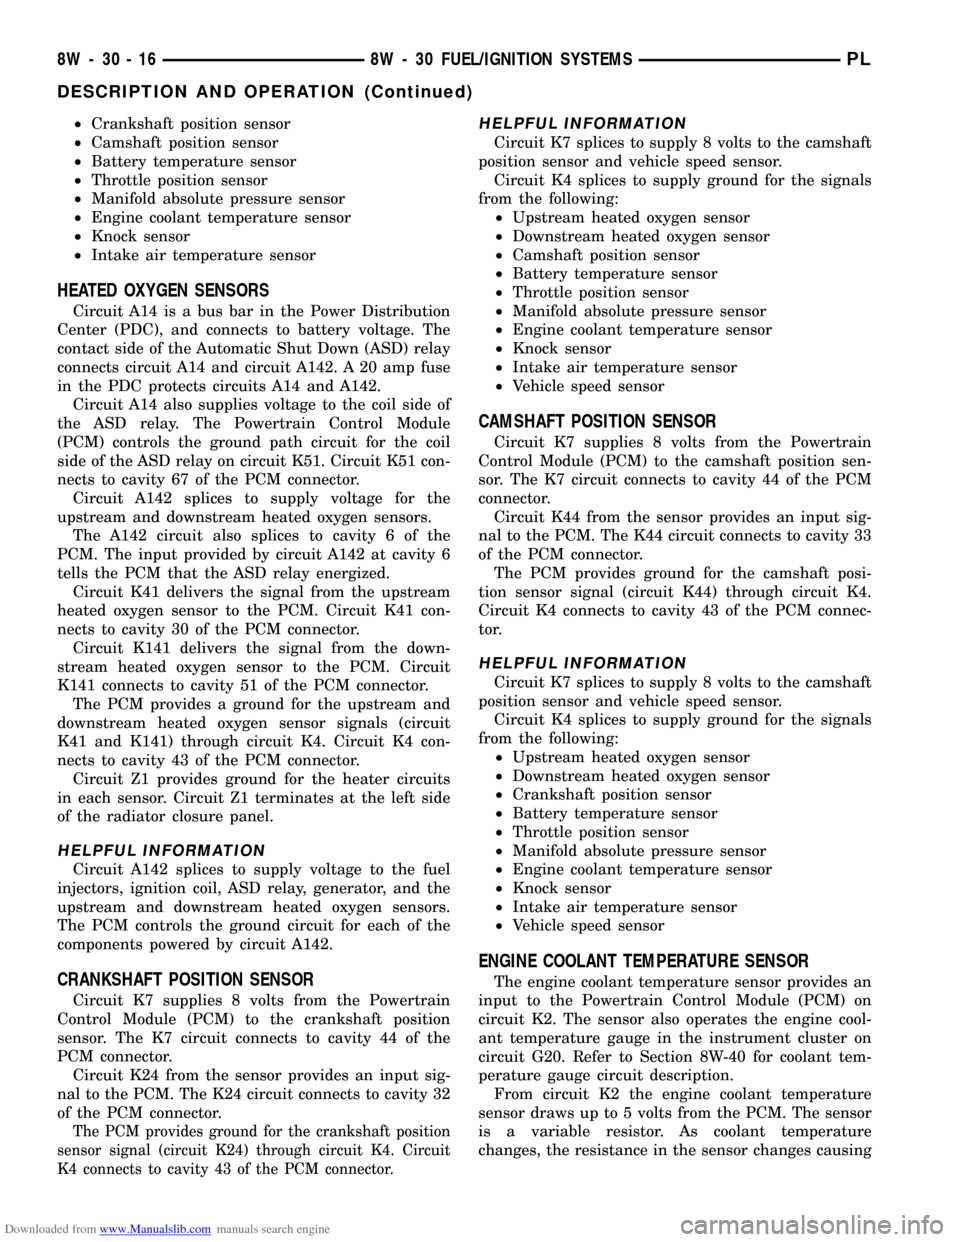 DODGE NEON 1997 1.G Wiring Diagrams Workshop Manual Downloaded from www.Manualslib.com manuals search engine ²Crankshaft position sensor
²Camshaft position sensor
²Battery temperature sensor
²Throttle position sensor
²Manifold absolute pressure se